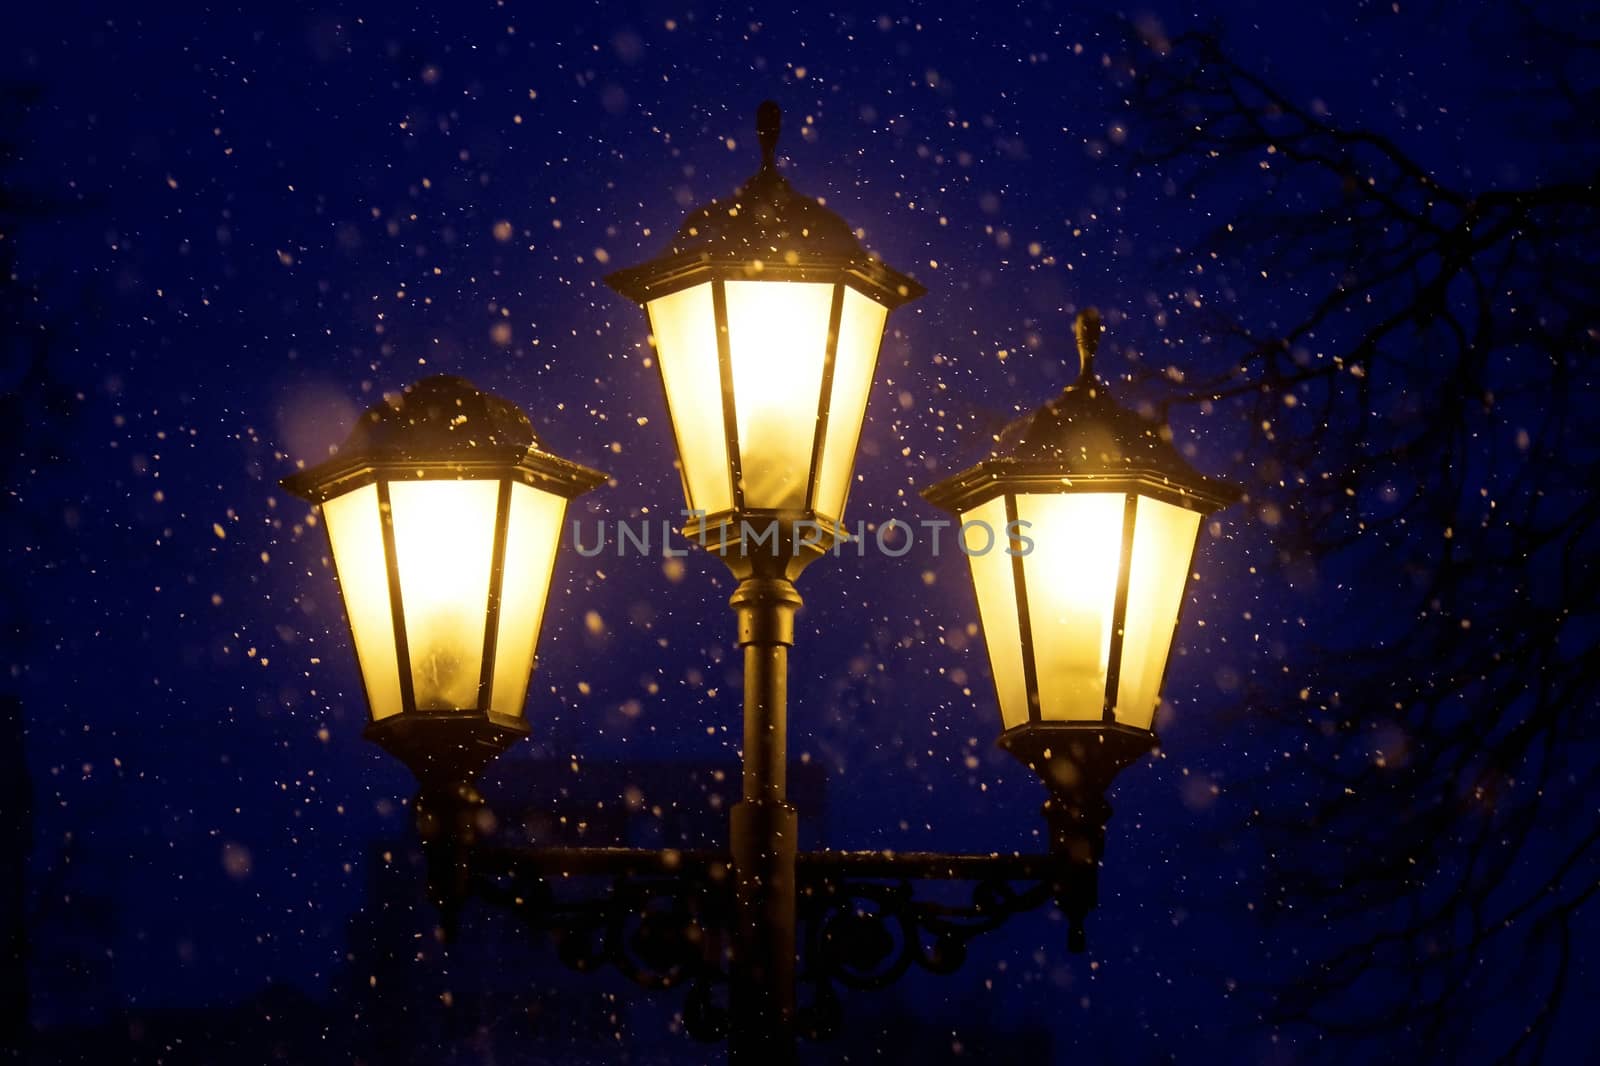 Triple lantern on a dark blue night sky and falling snow by Chiffanna